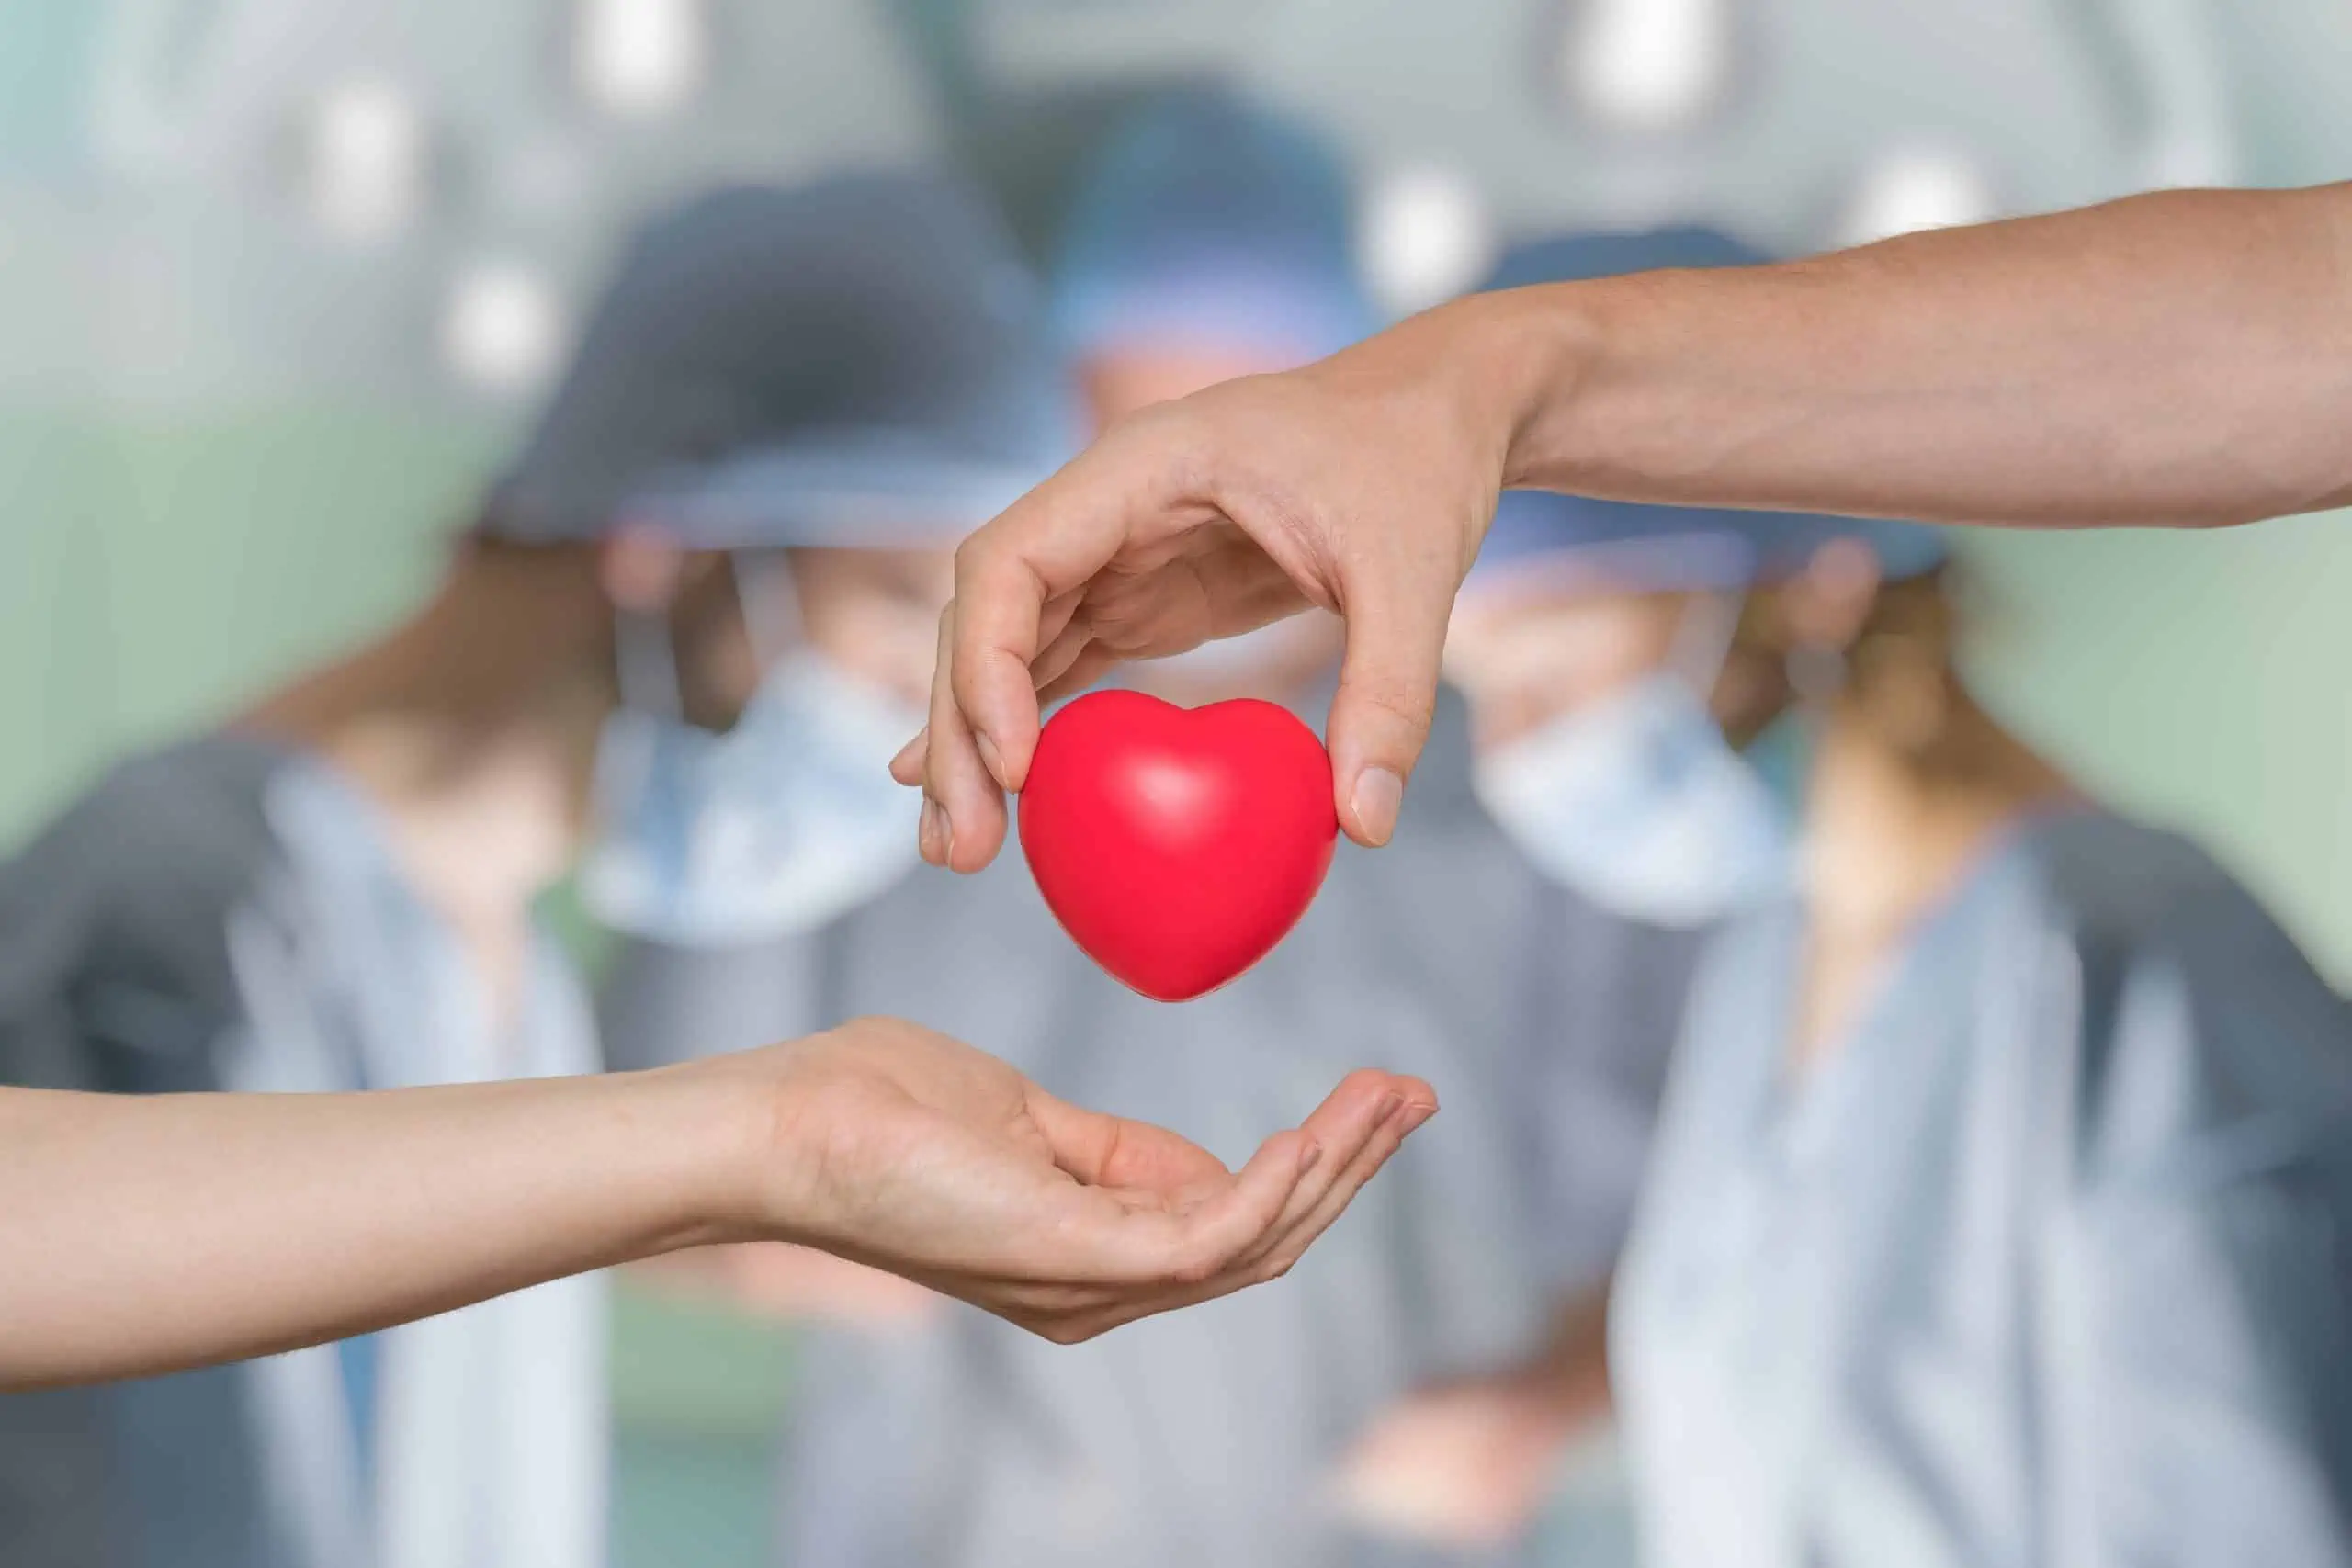 darivanje organa - kako postati darivatelj: odobravanje uzimanja organa